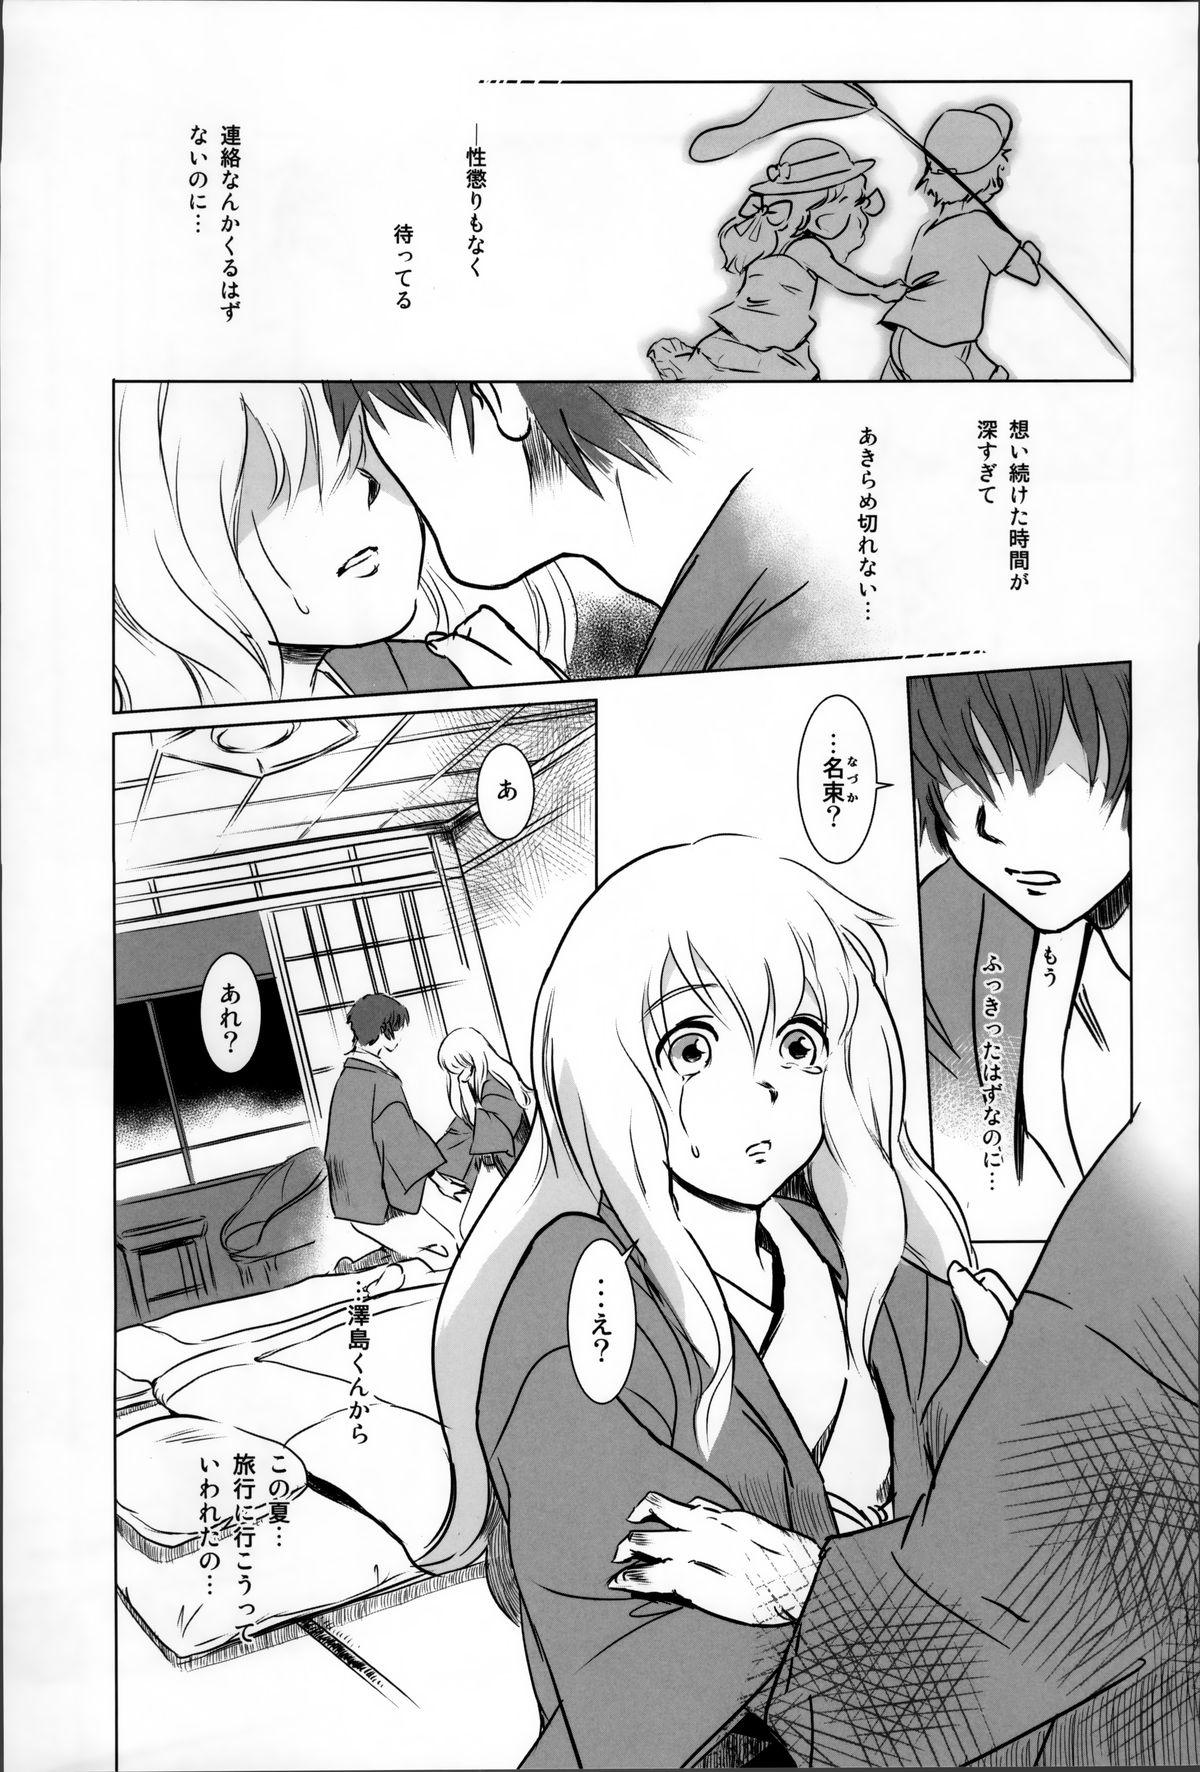 Pierced Story of the 'N' Situation - Situation#2 Kokoro Utsuri Erotica - Page 3